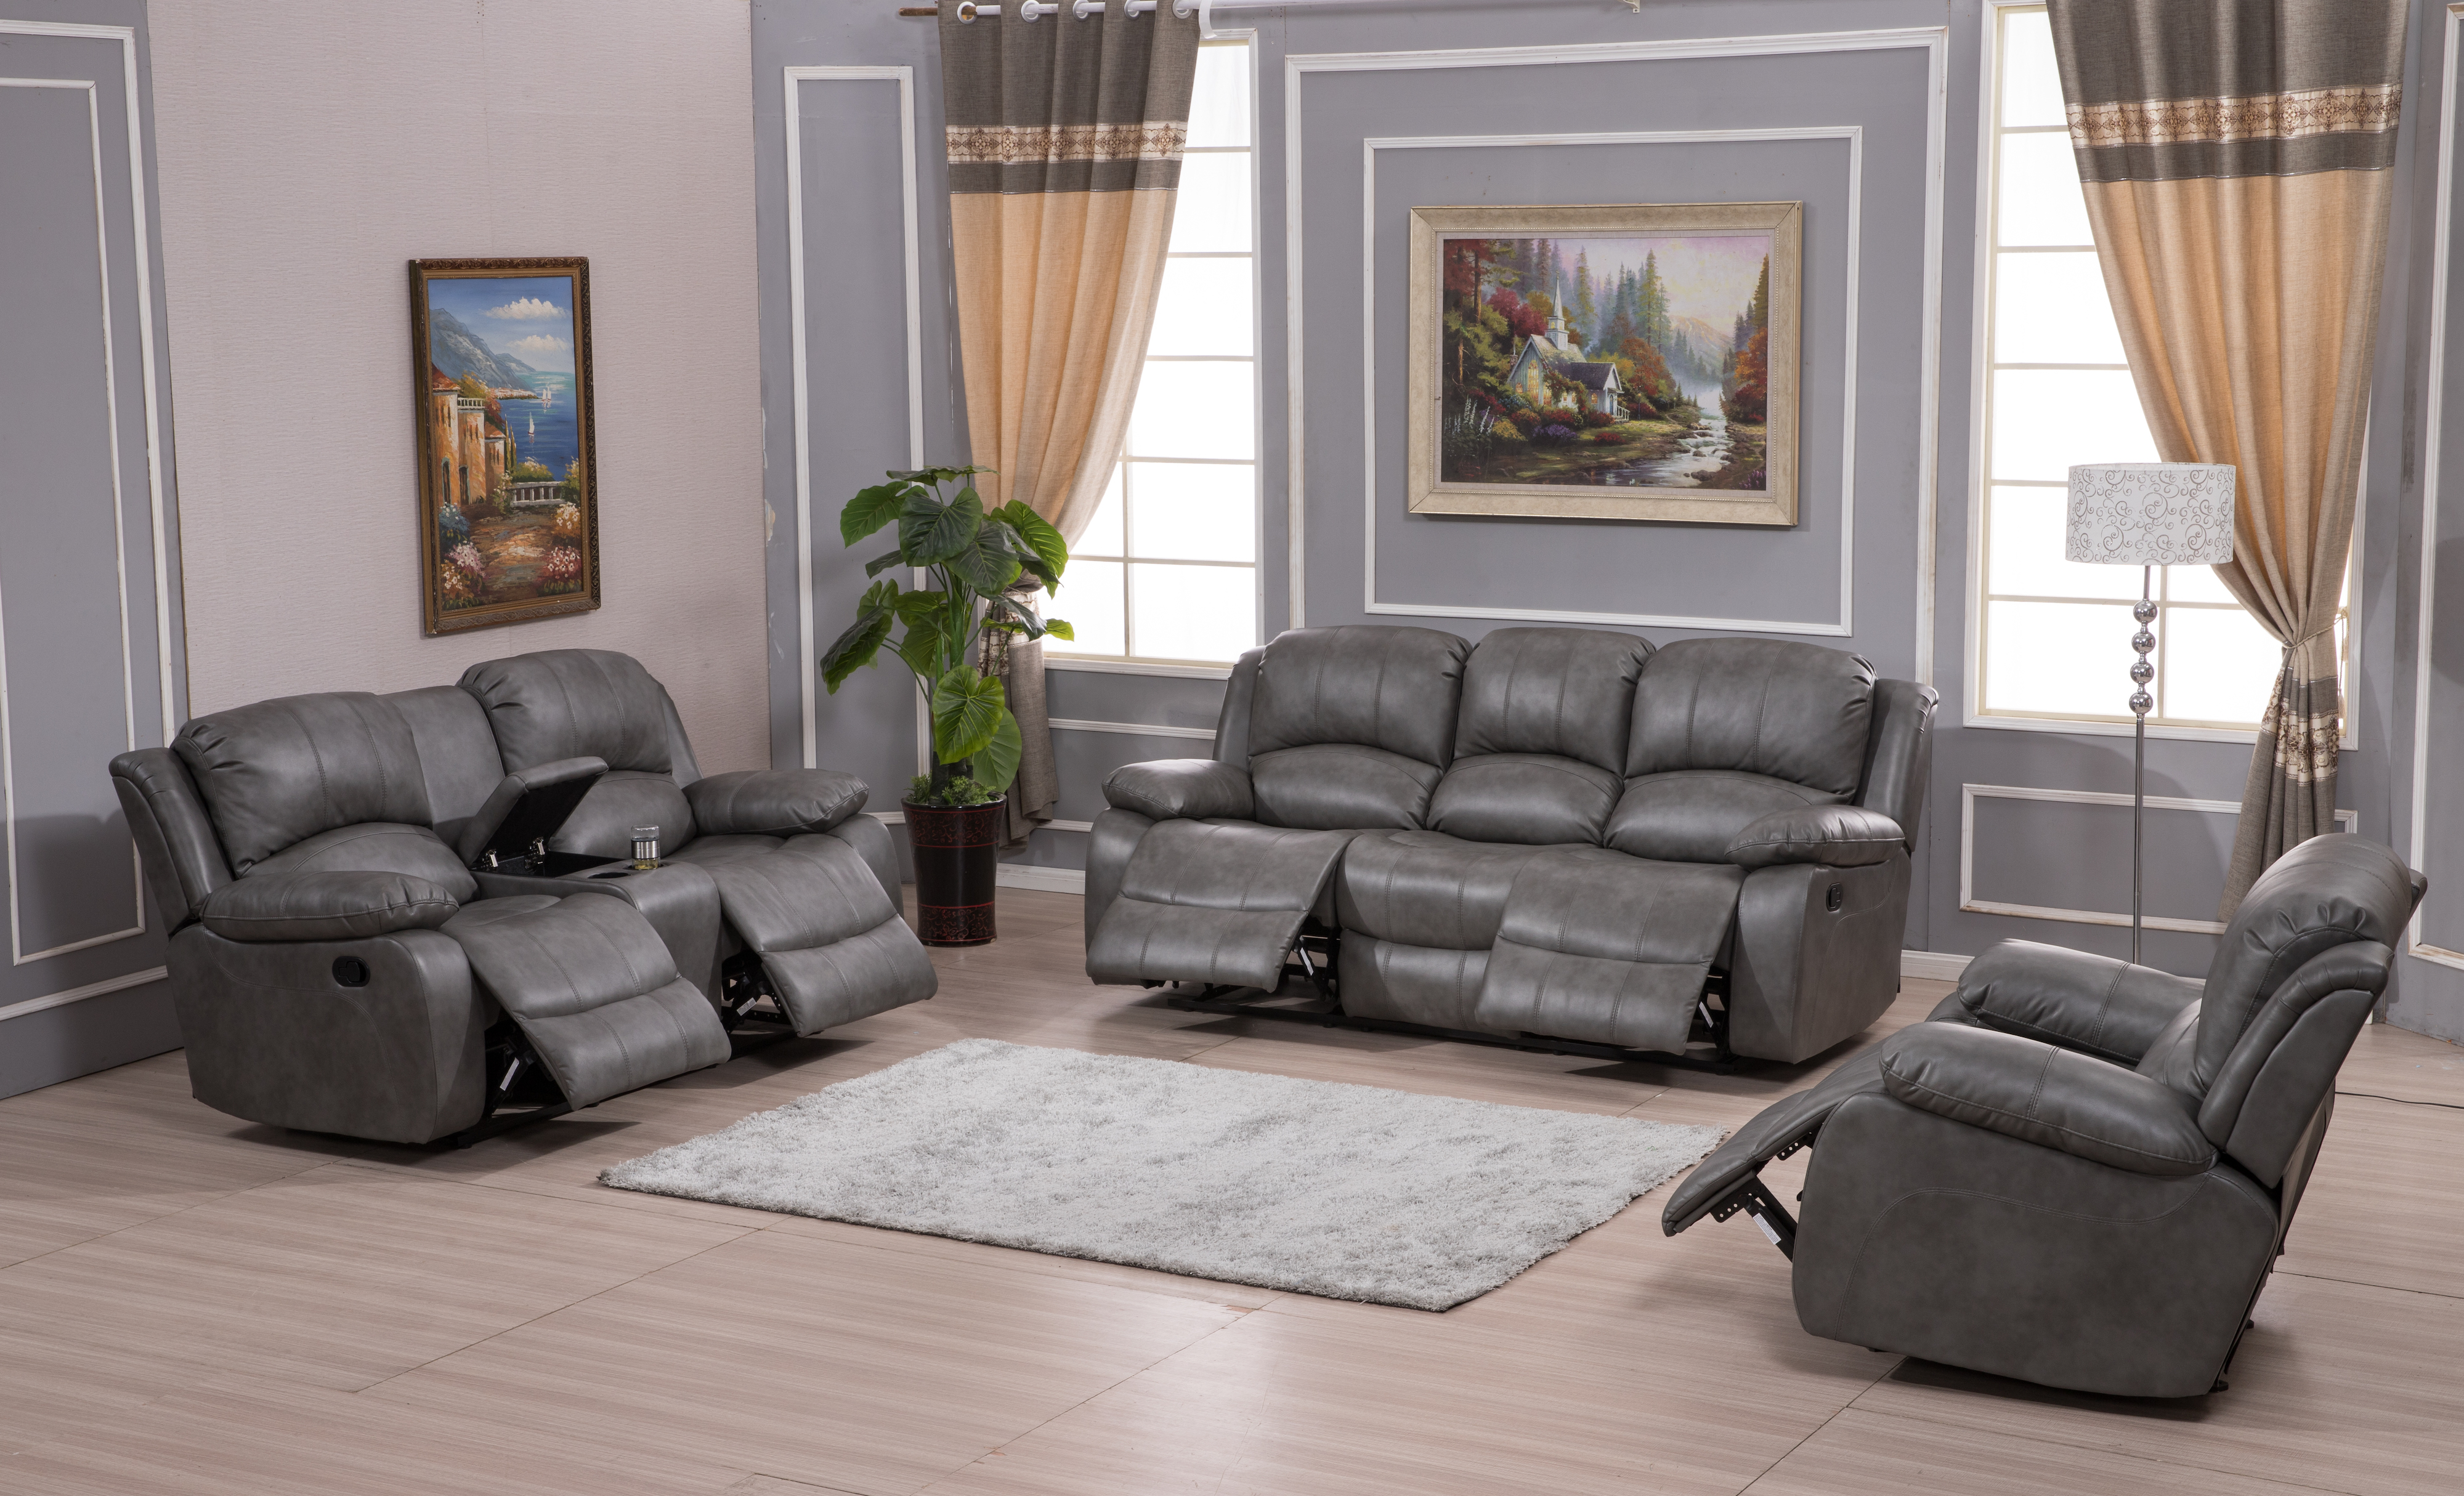 Betsy Furniture 3-PC Bonded Leather Recliner Set Living Room Set 8018-321